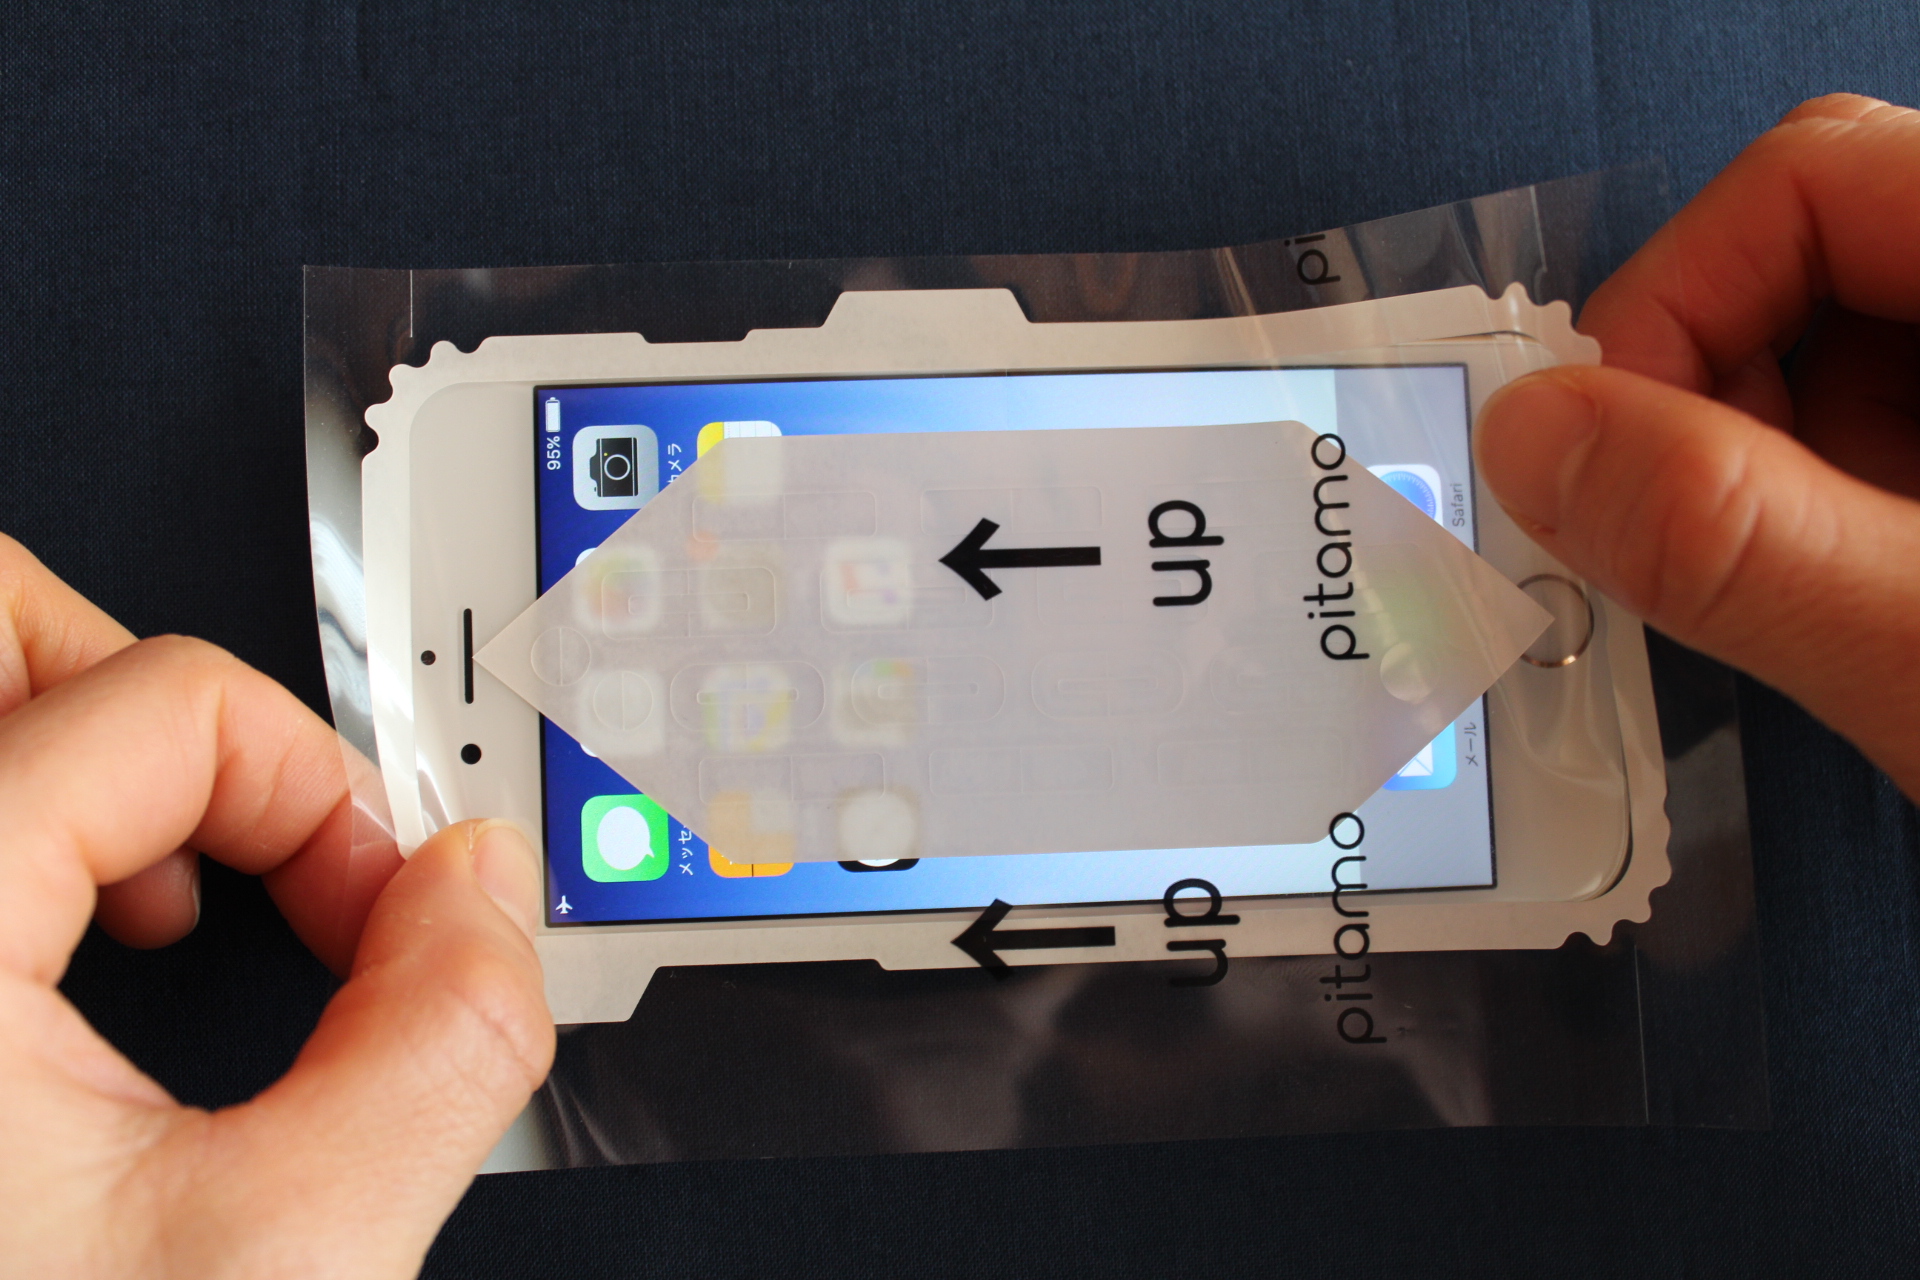 Iphoneに貼るだけで 水没故障を防ぐ 透明シールが10円で4月15日発売 Engadget 日本版